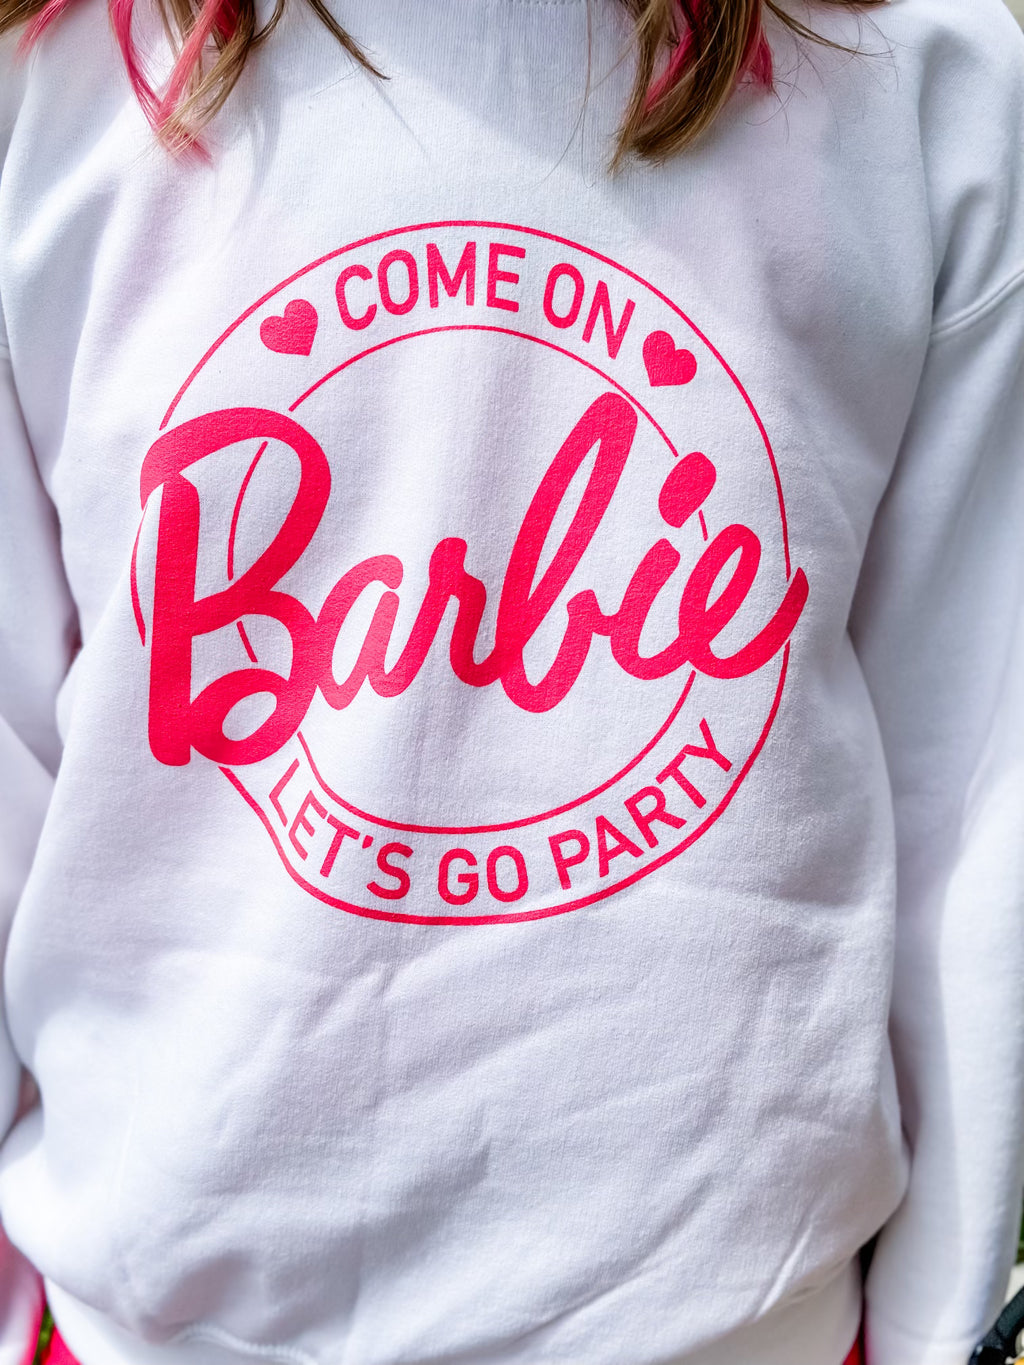 Come on Barbie Sweatshirt